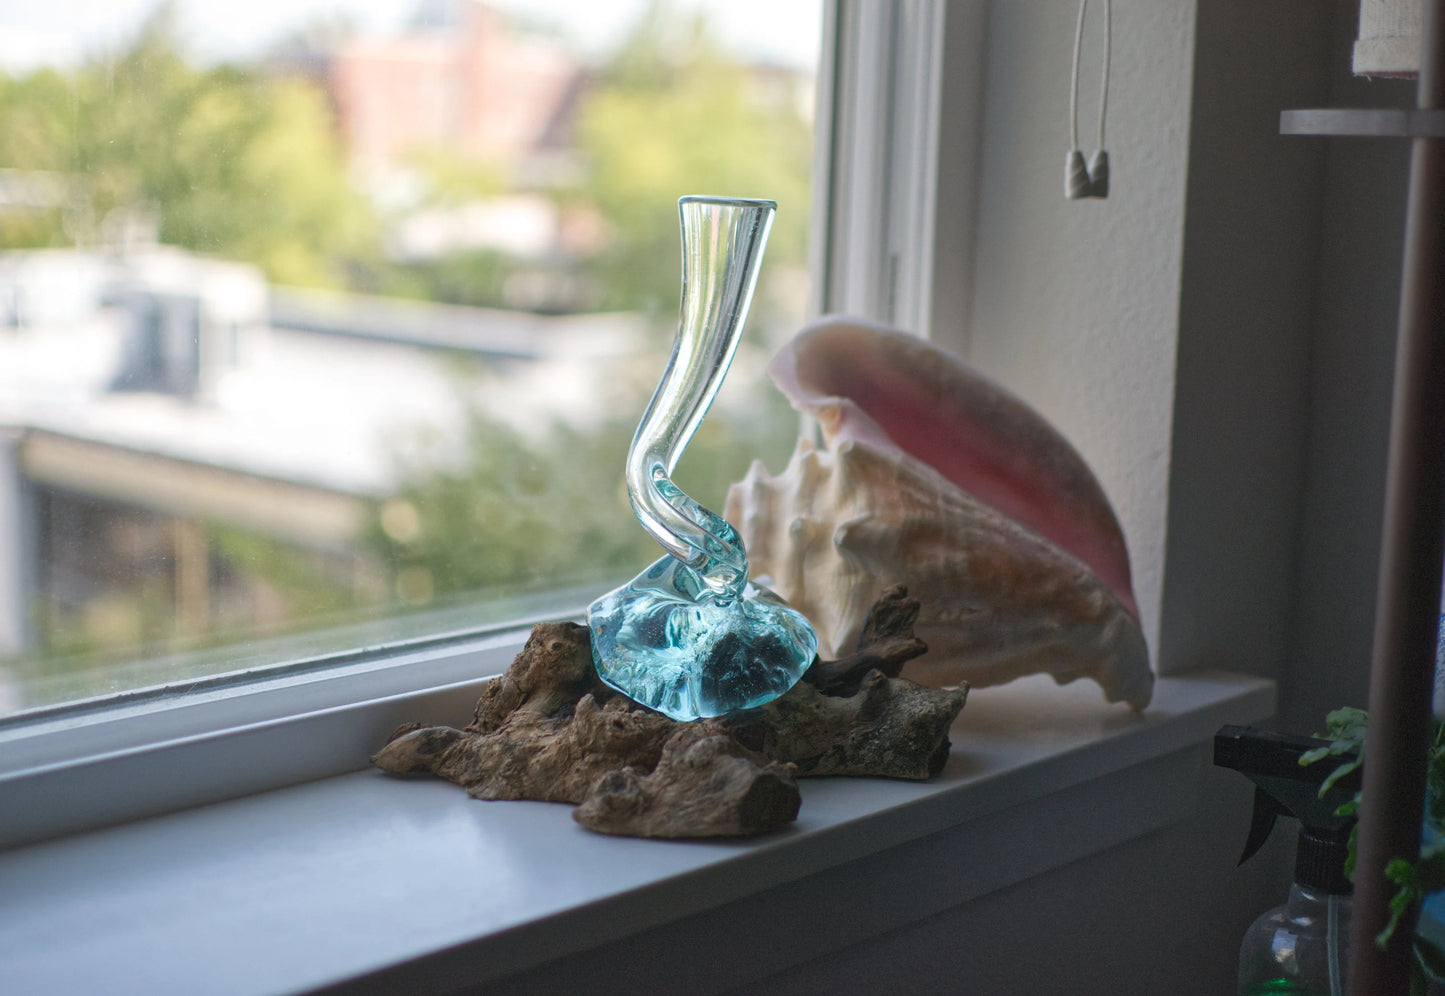 Twisty Molten Glass Skinny Vase on Gamal Root Base